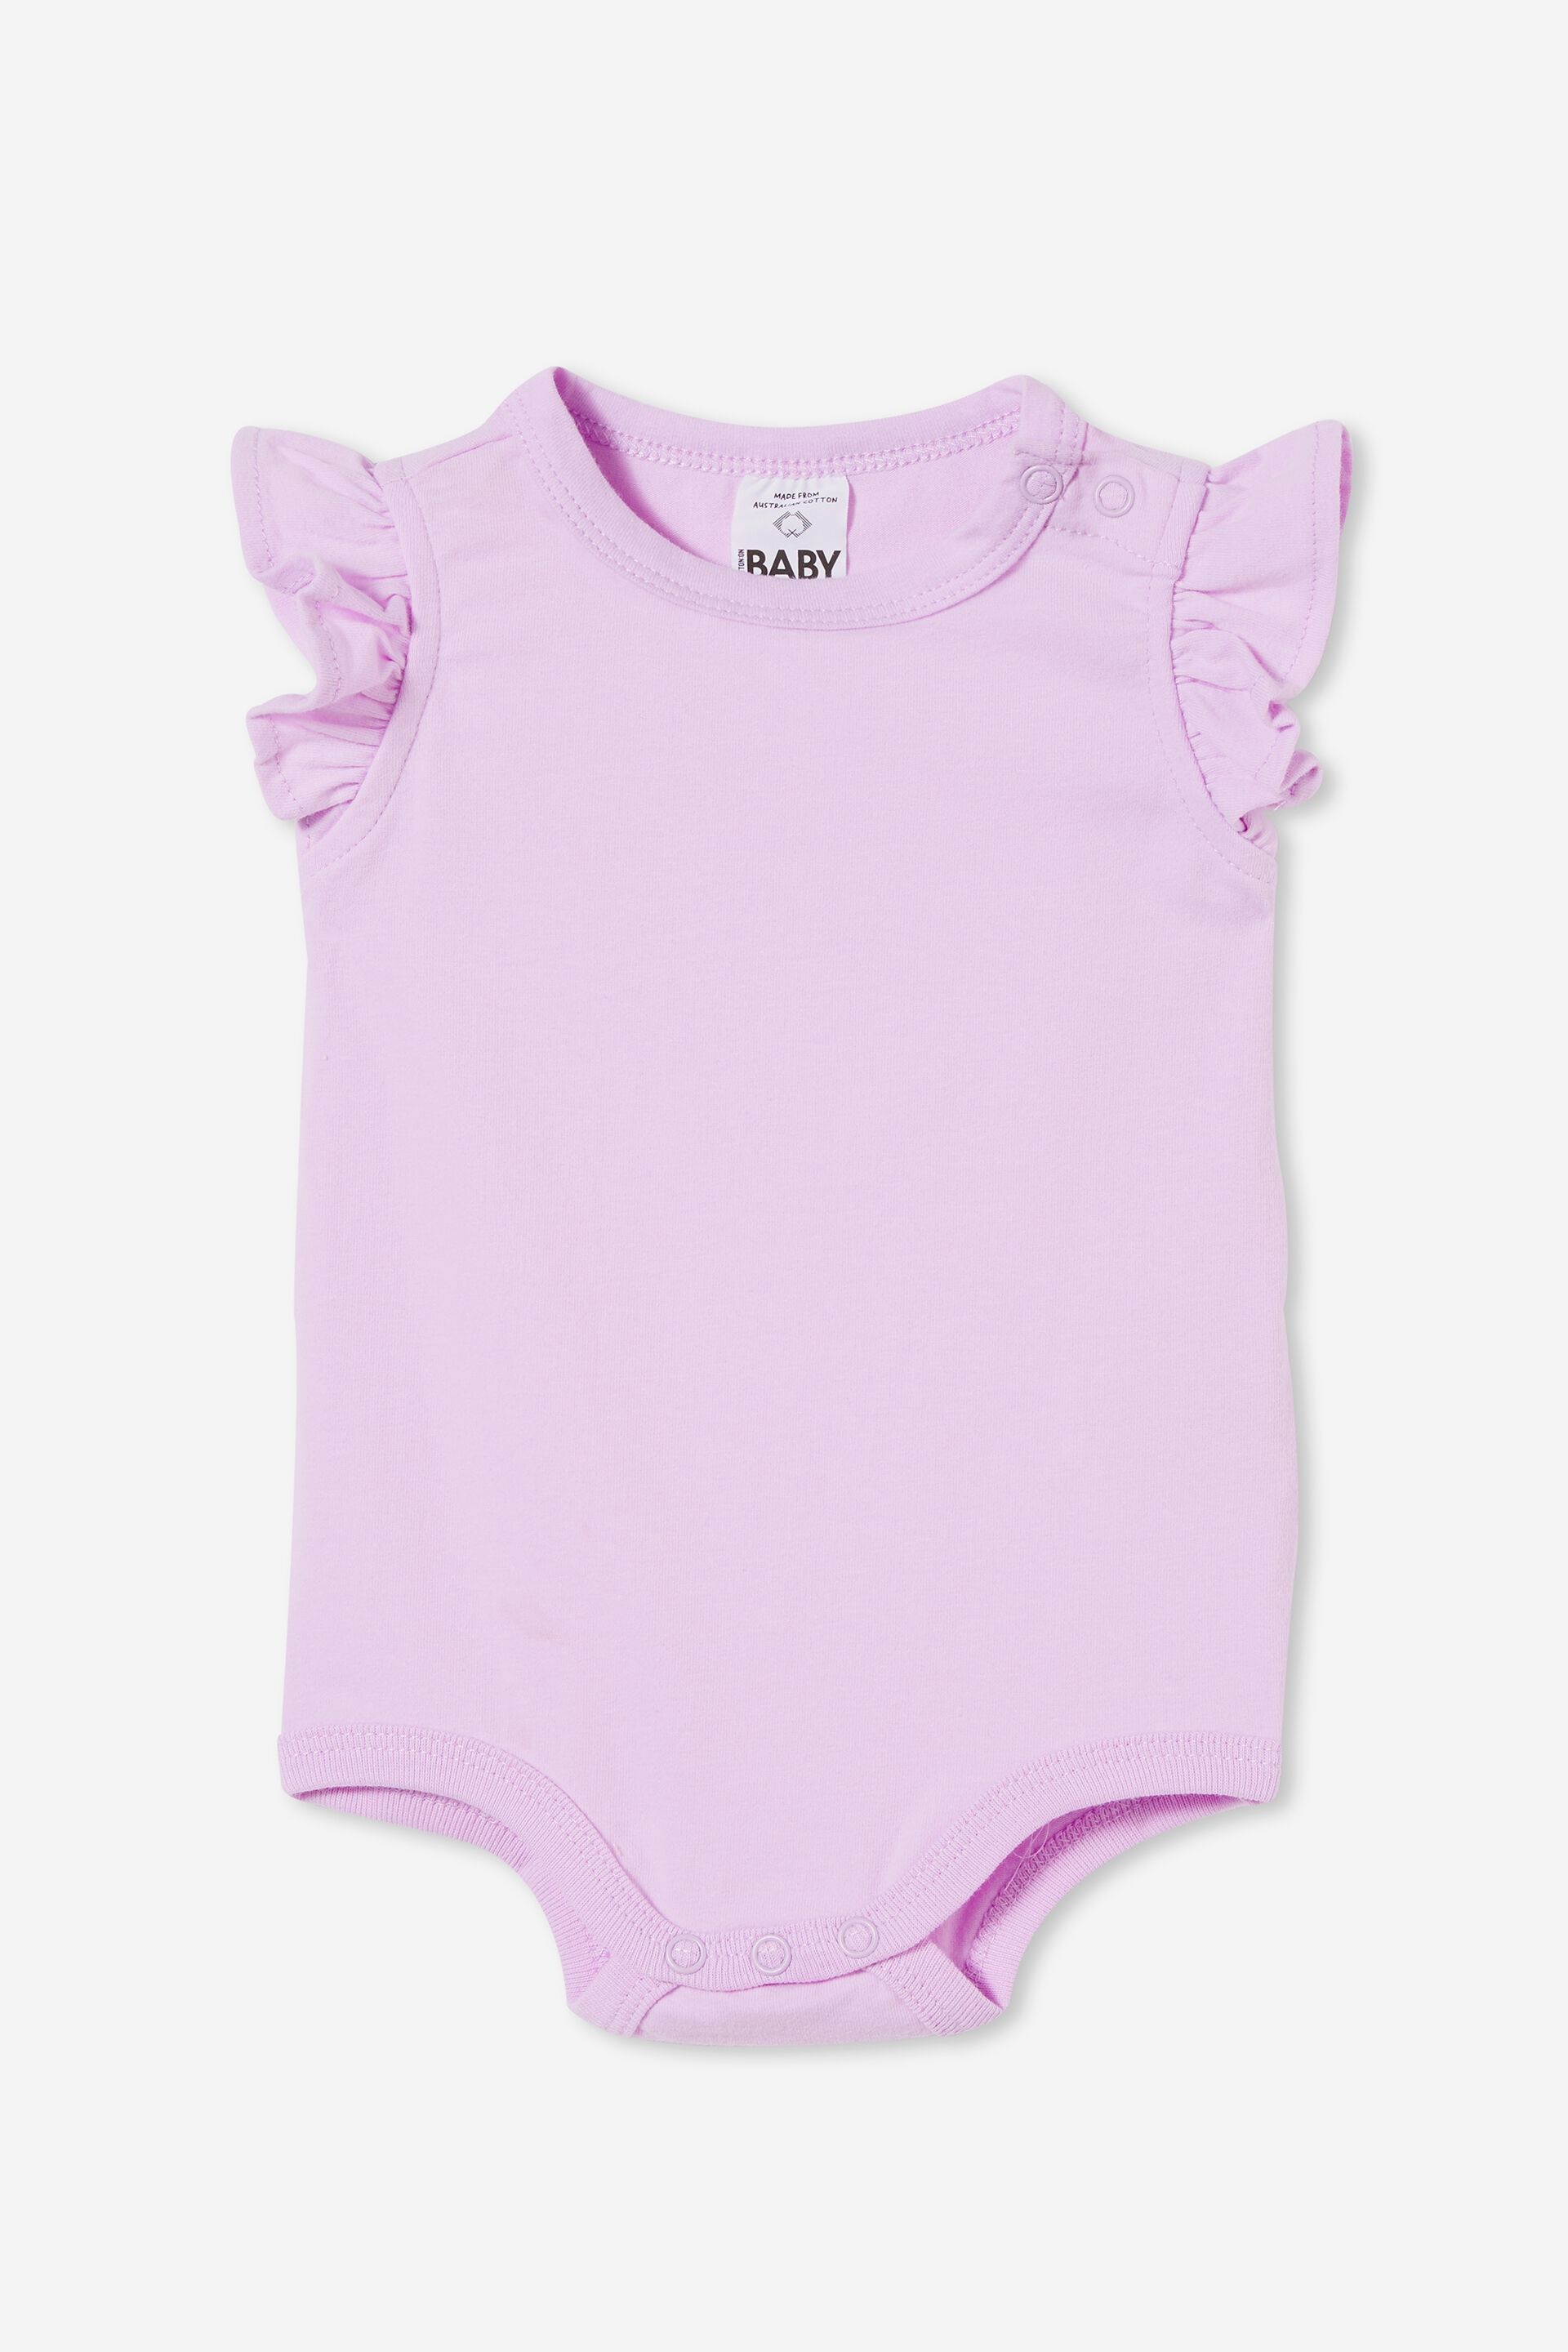 Baby All In Ones & Bodysuits | The Sleeveless Ruffle Bubbysuit - GV96716